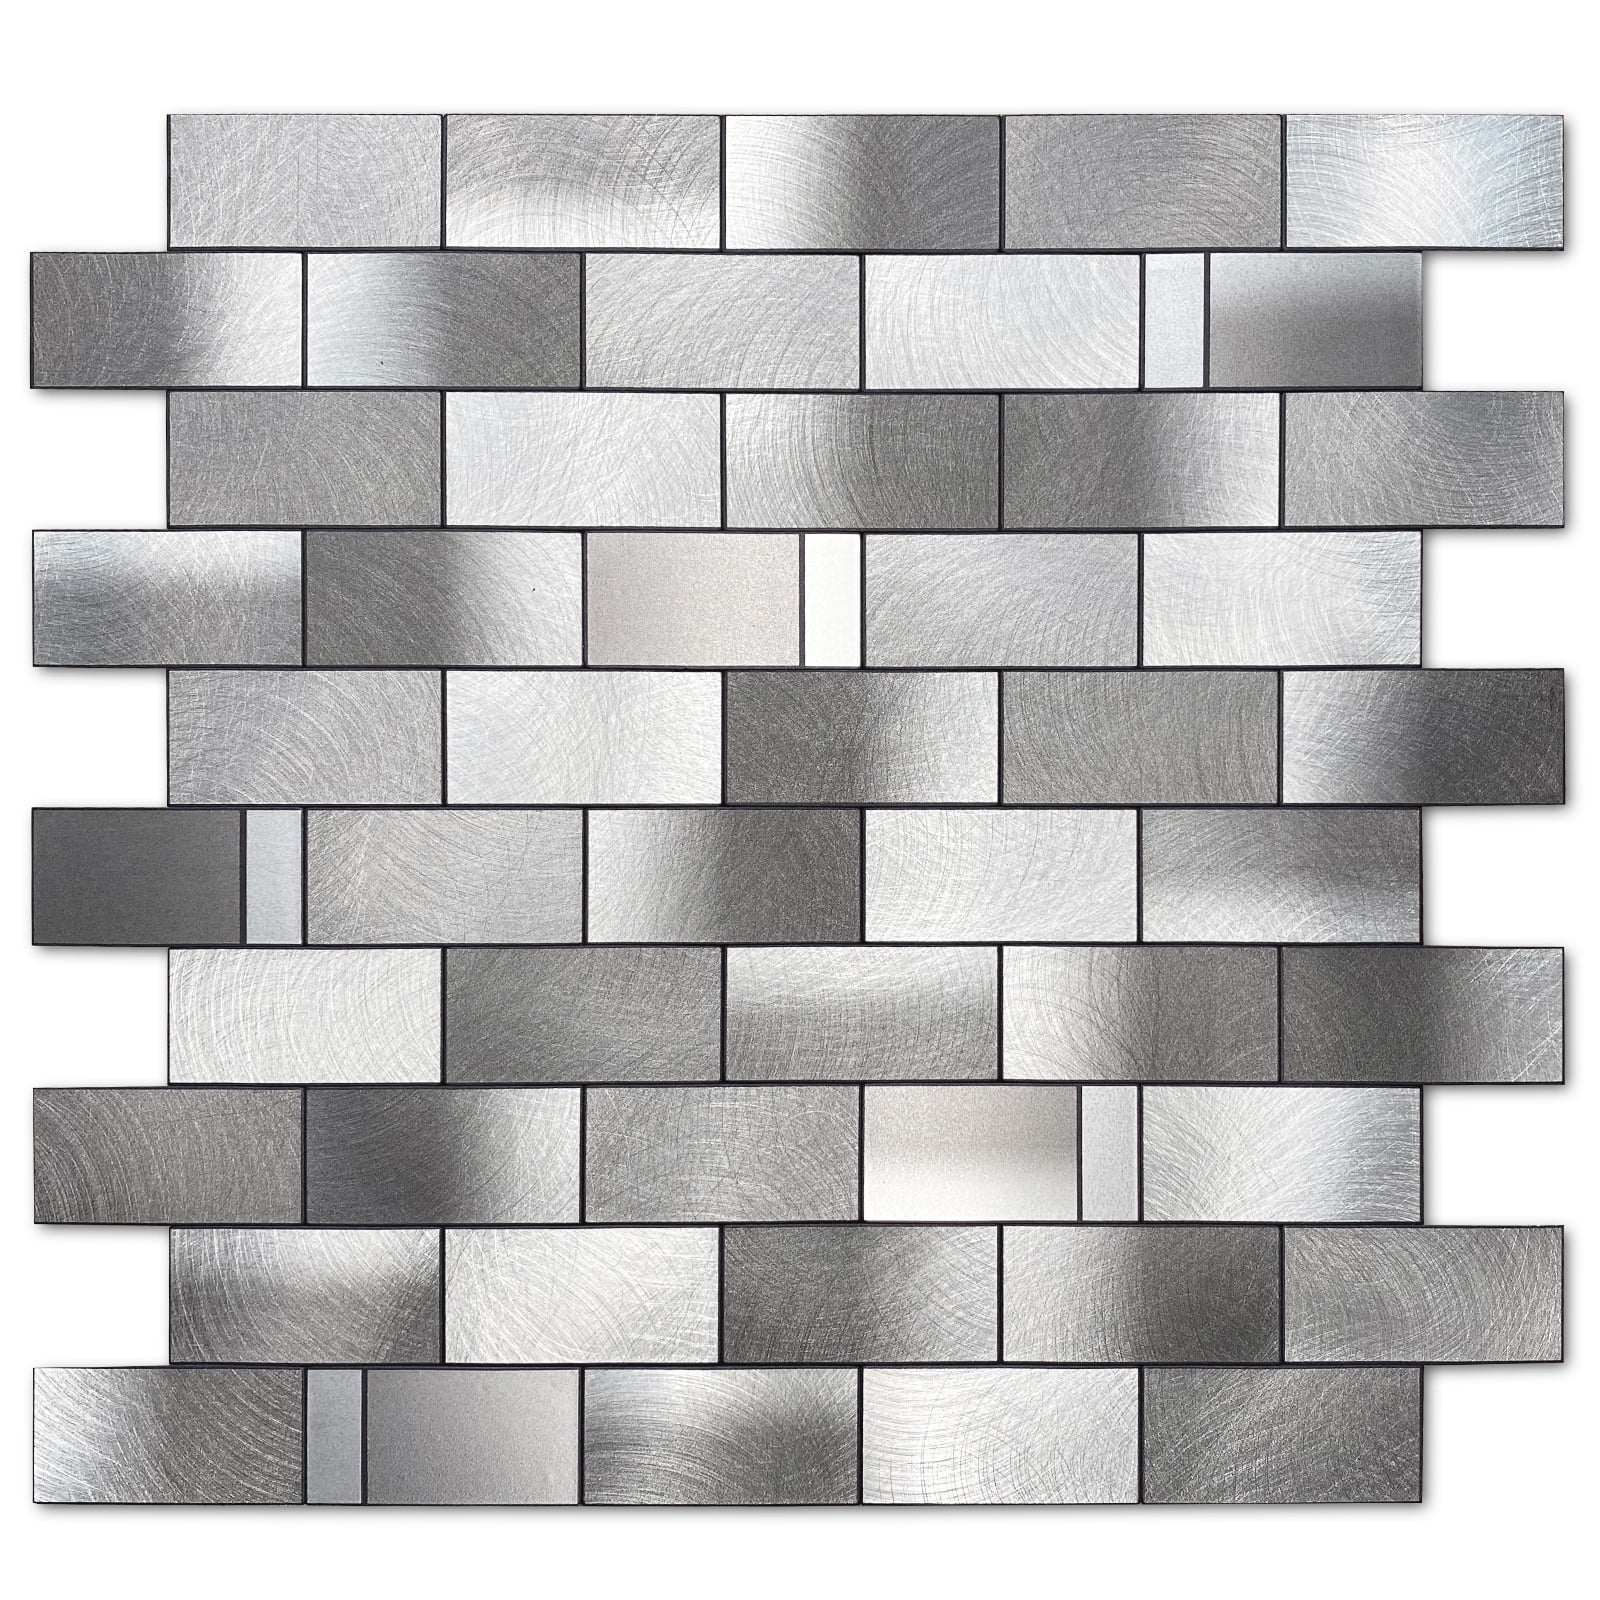 BeNice Self Adhesive Splashback Kitchen Adhesive Tiles,Bathroom Stick Wall Tiles Metal Adhesive Tiles 3D Tiles 5sheets,Gray Mist